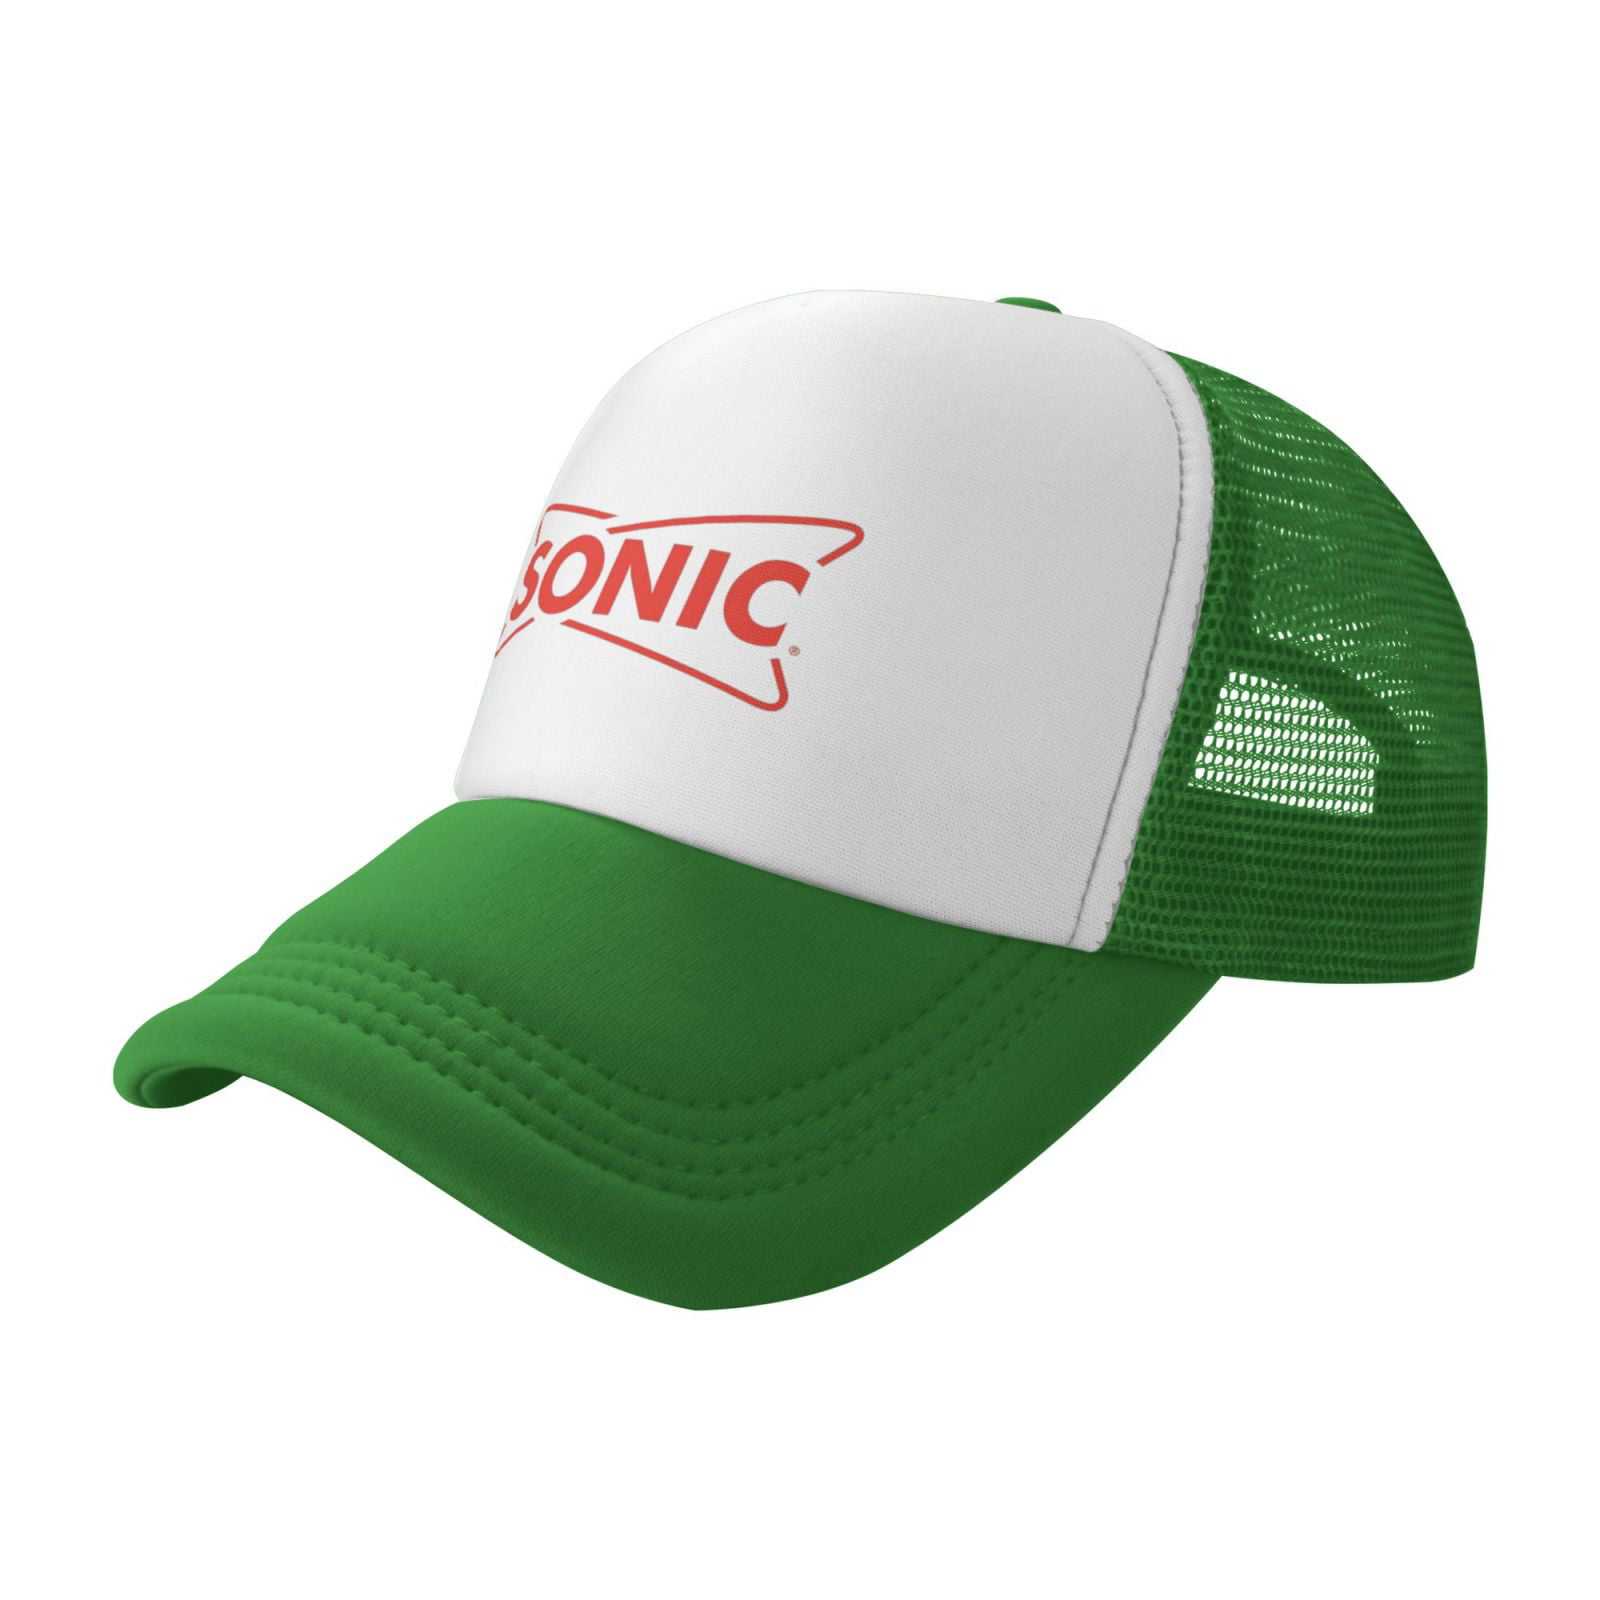 Sonics Green and White Trucker Hats